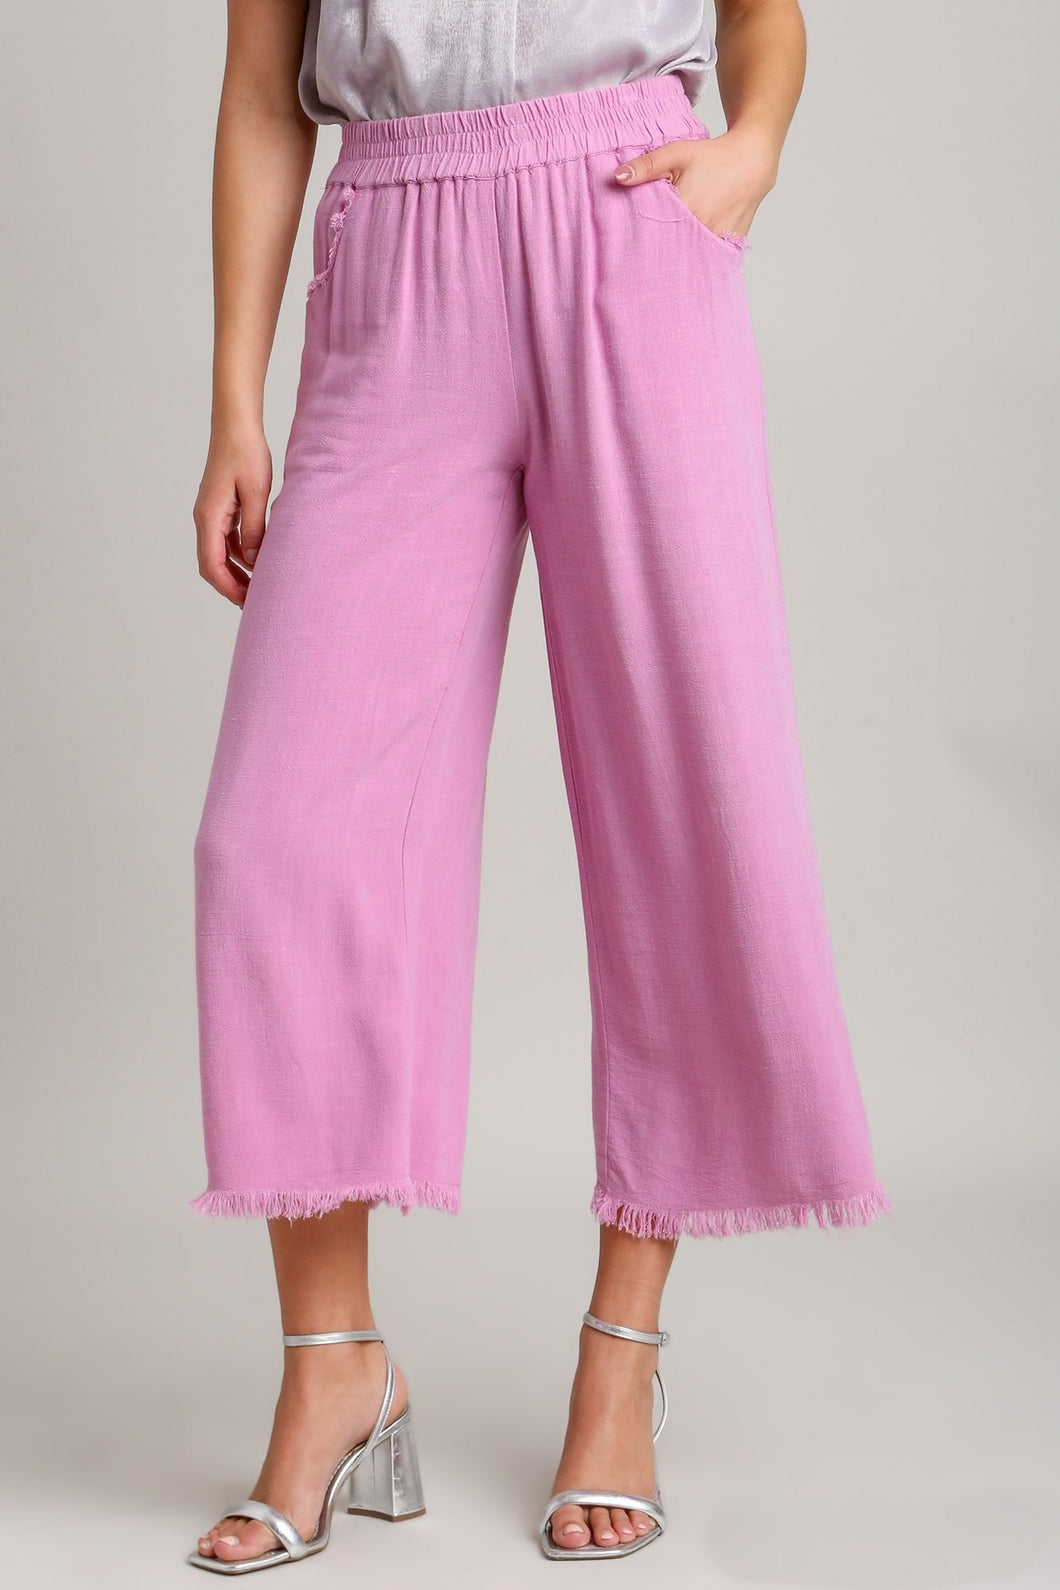 Umgee Wide Leg Linen Pants in Pink Mauve